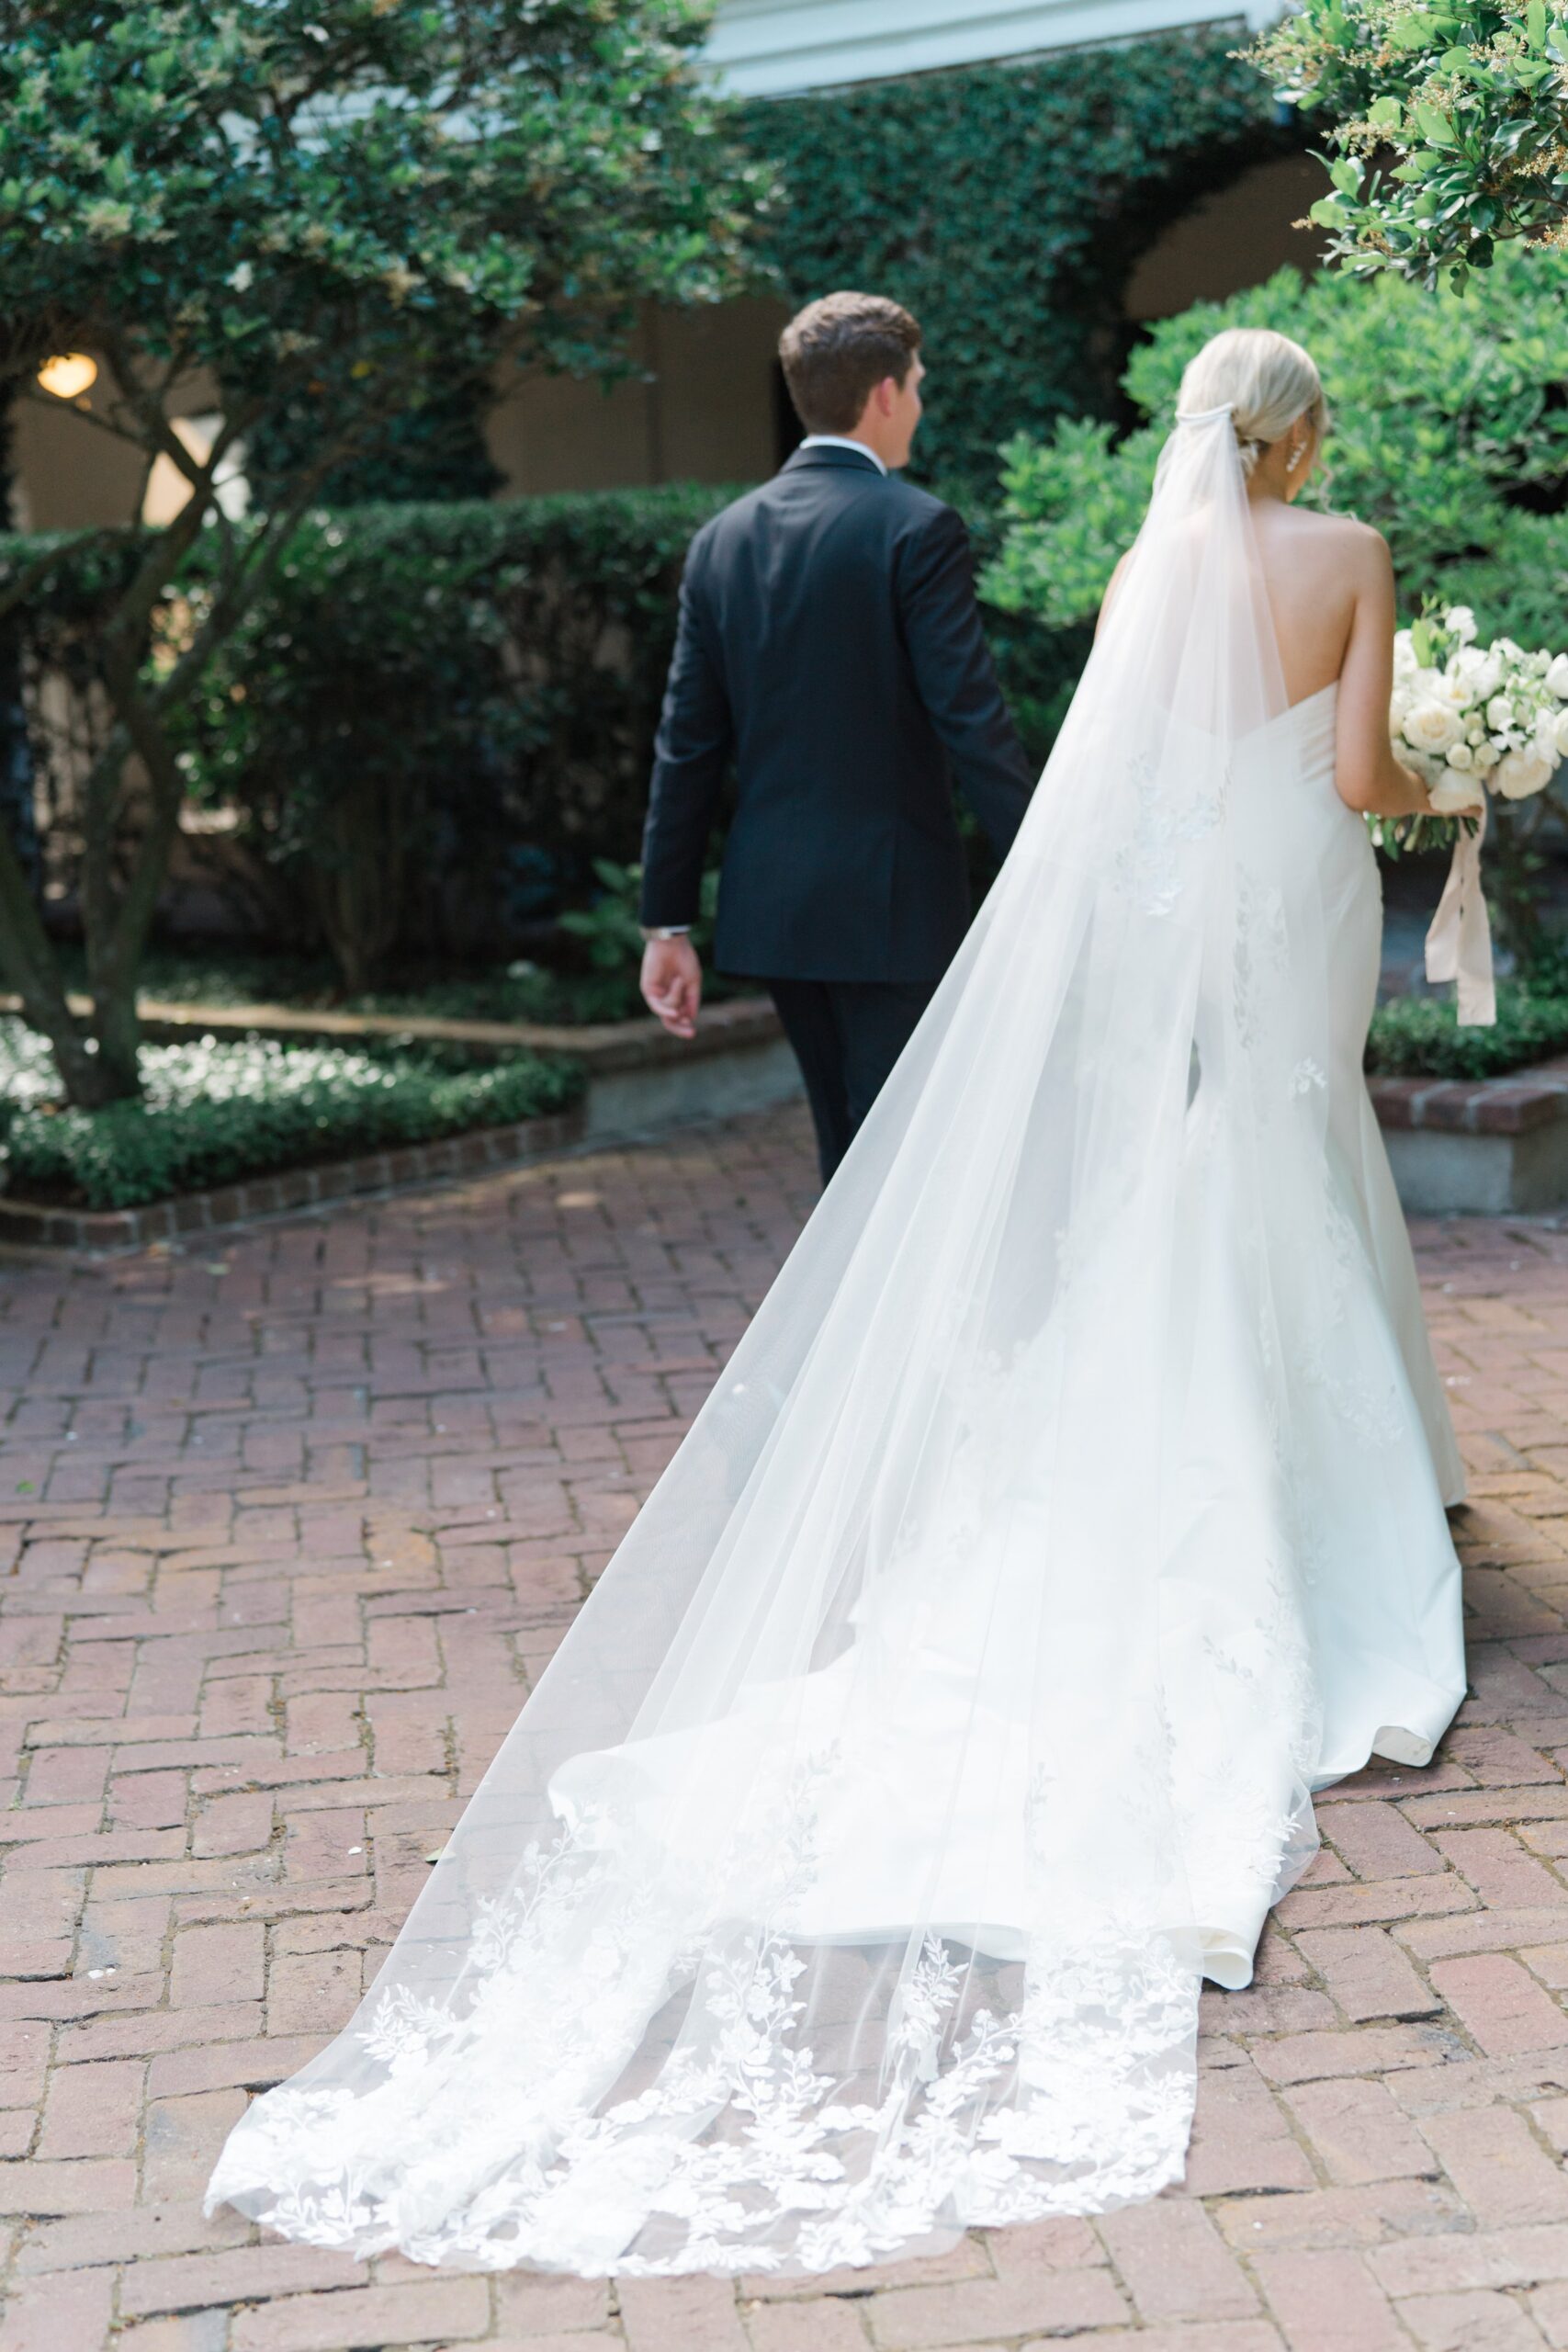 Bride and groom walk away after spring wedding ceremony